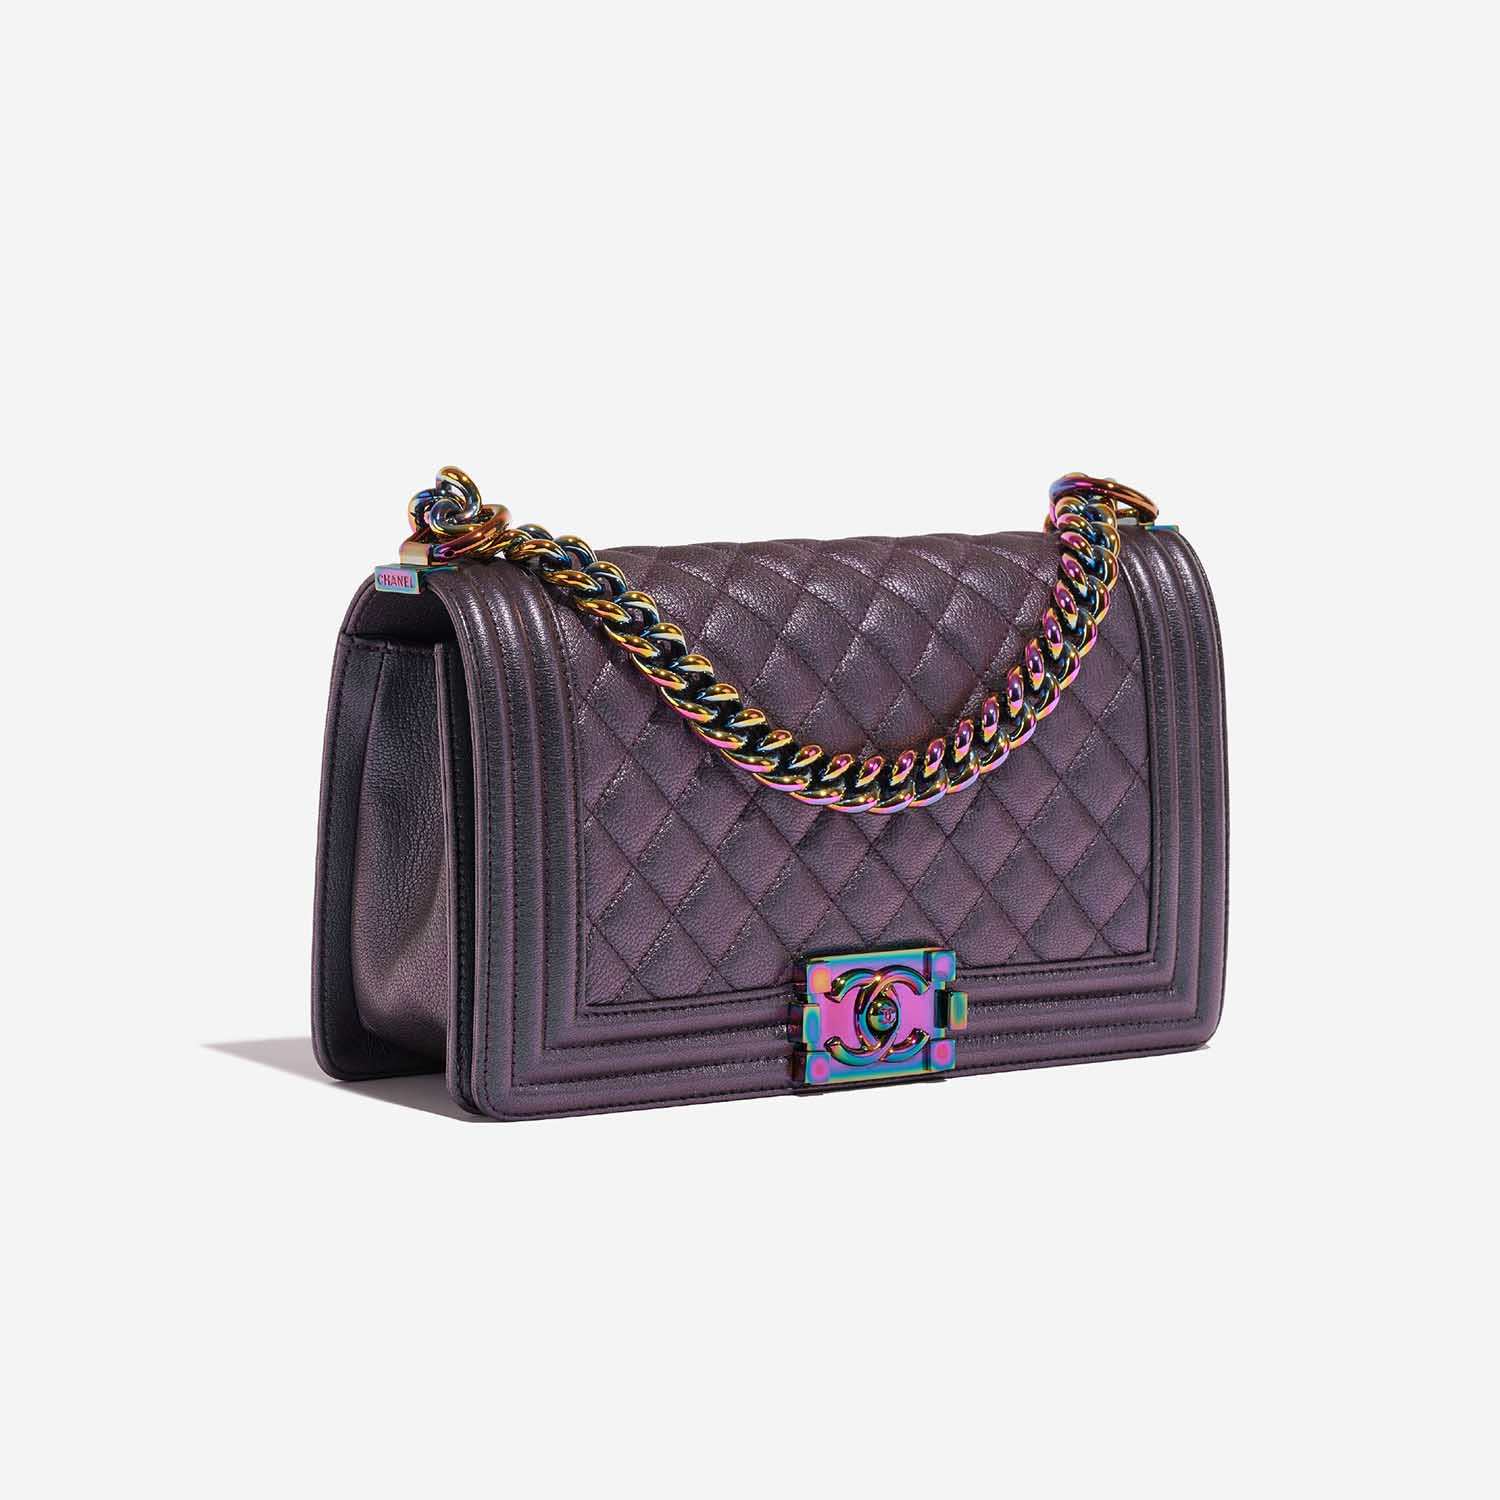 Chanel Boy OldMedium Purple-Greyish Side Front  | Sell your designer bag on Saclab.com